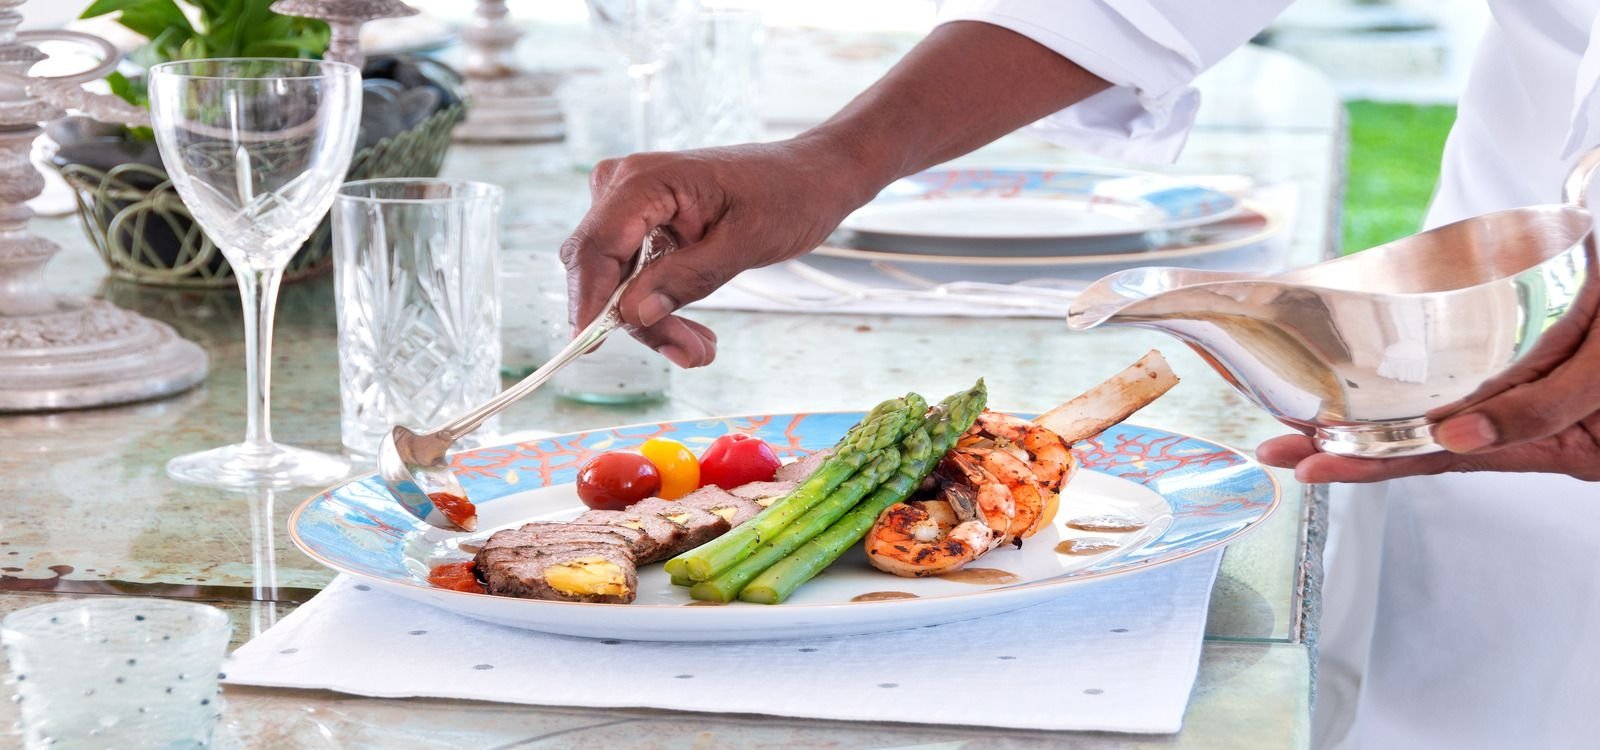 Caribbean chef serves a tasty homemade meal in a Top Villas Caribbean villa